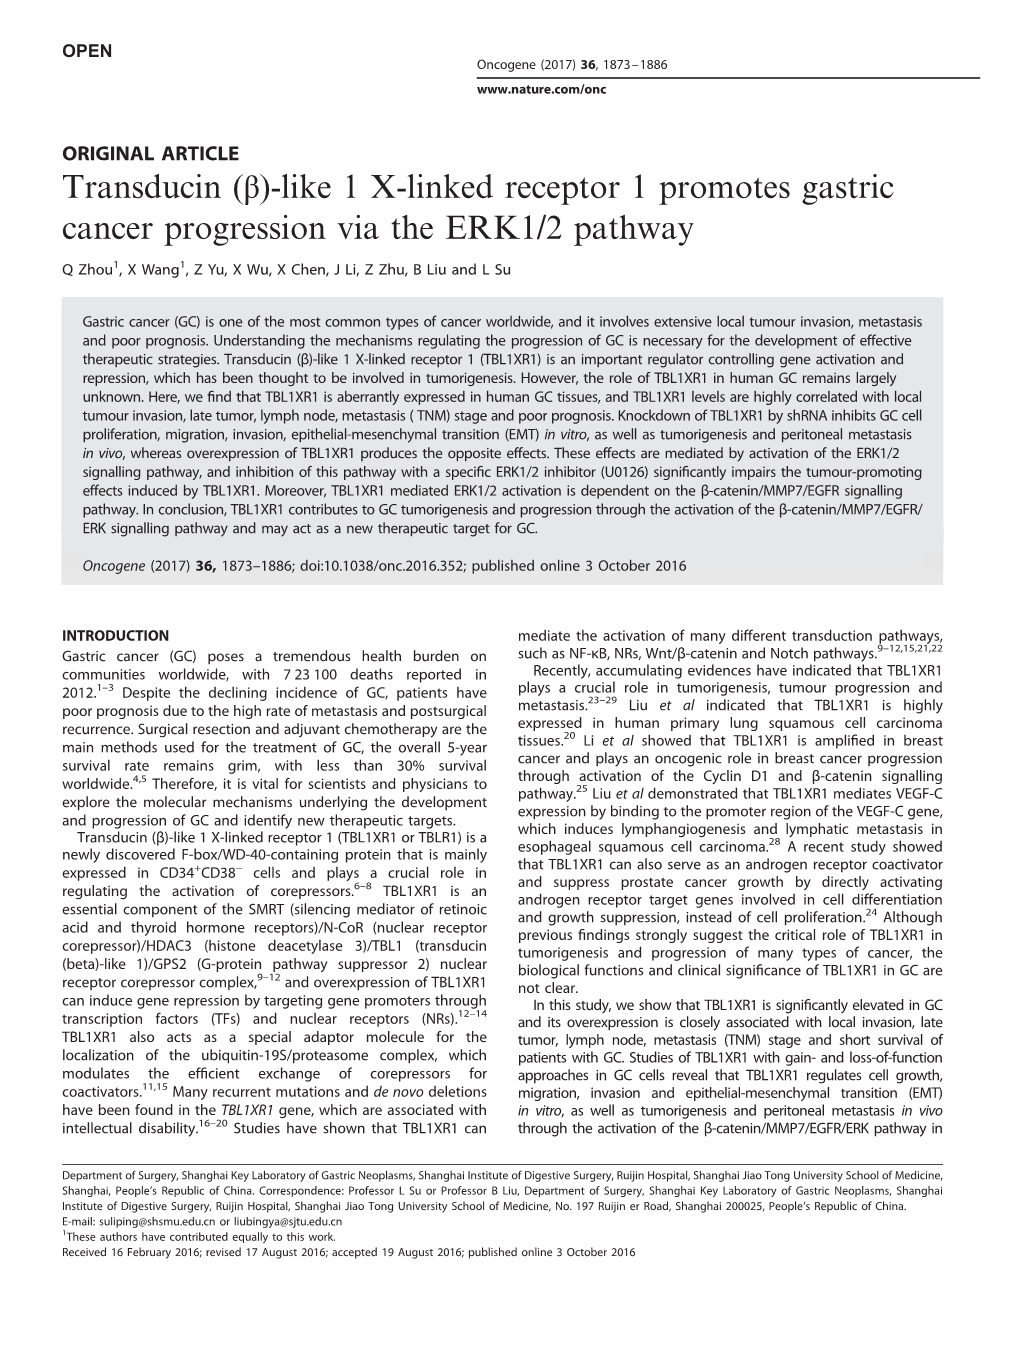 Transducin (Β)-Like 1 X-Linked Receptor 1 Promotes Gastric Cancer Progression Via the ERK1/2 Pathway